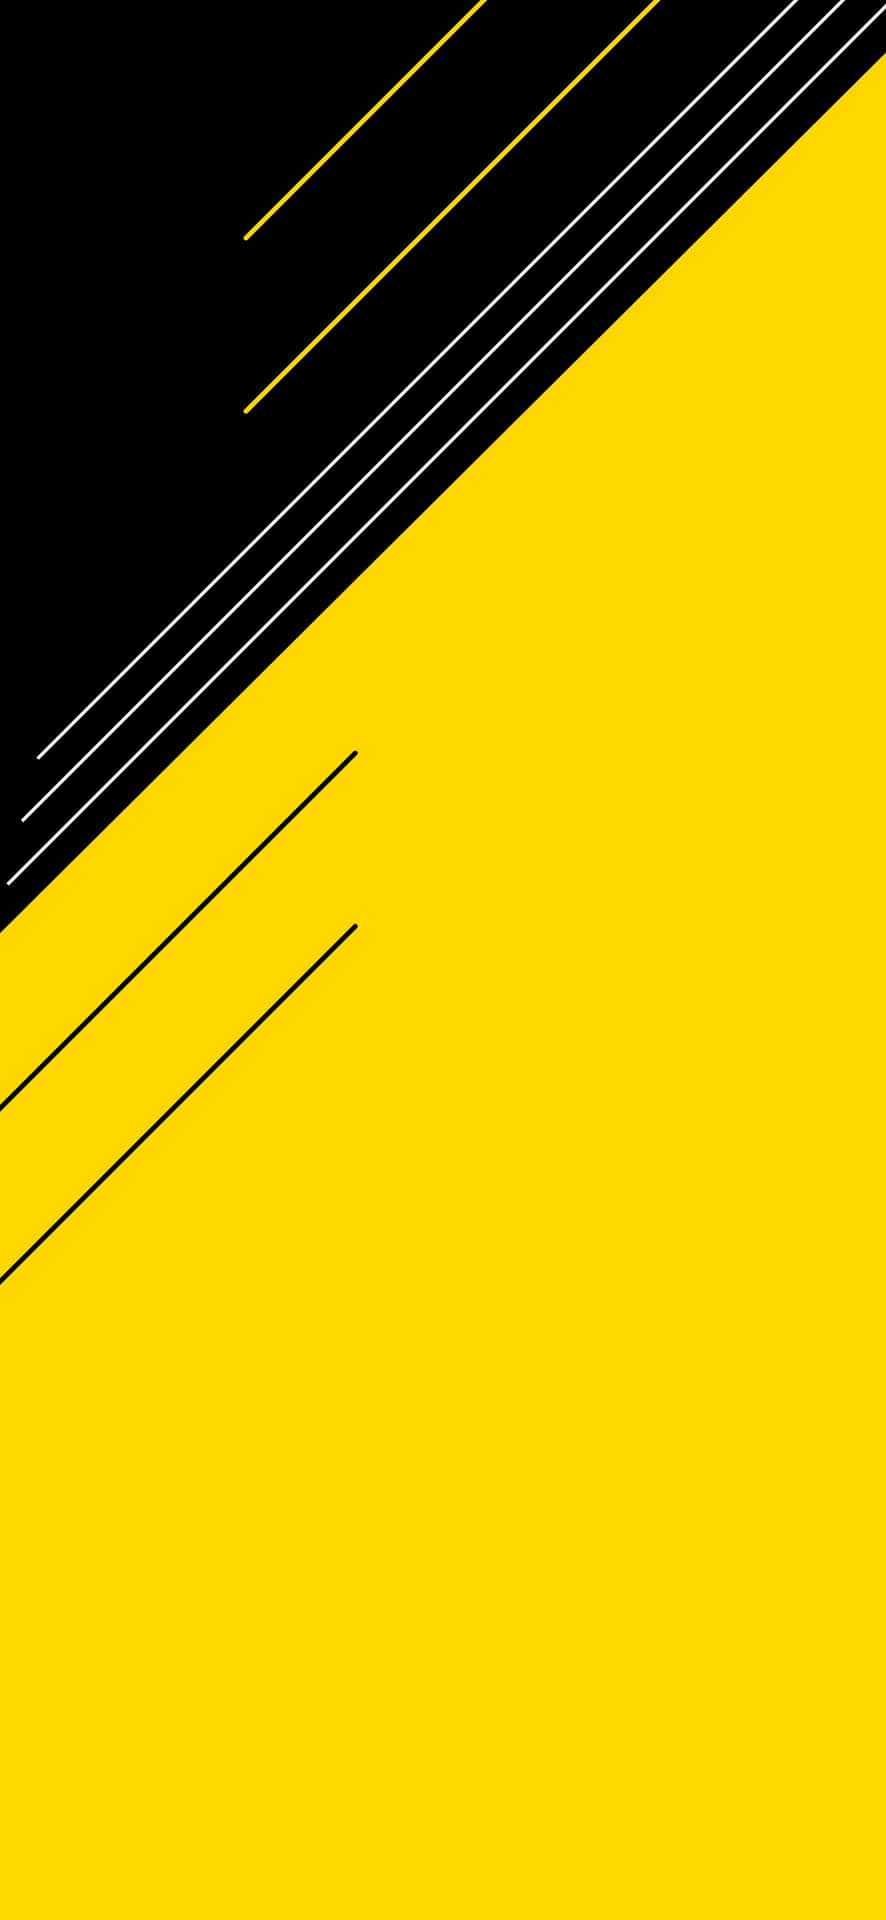 Abstract Yellowand Black Design Wallpaper